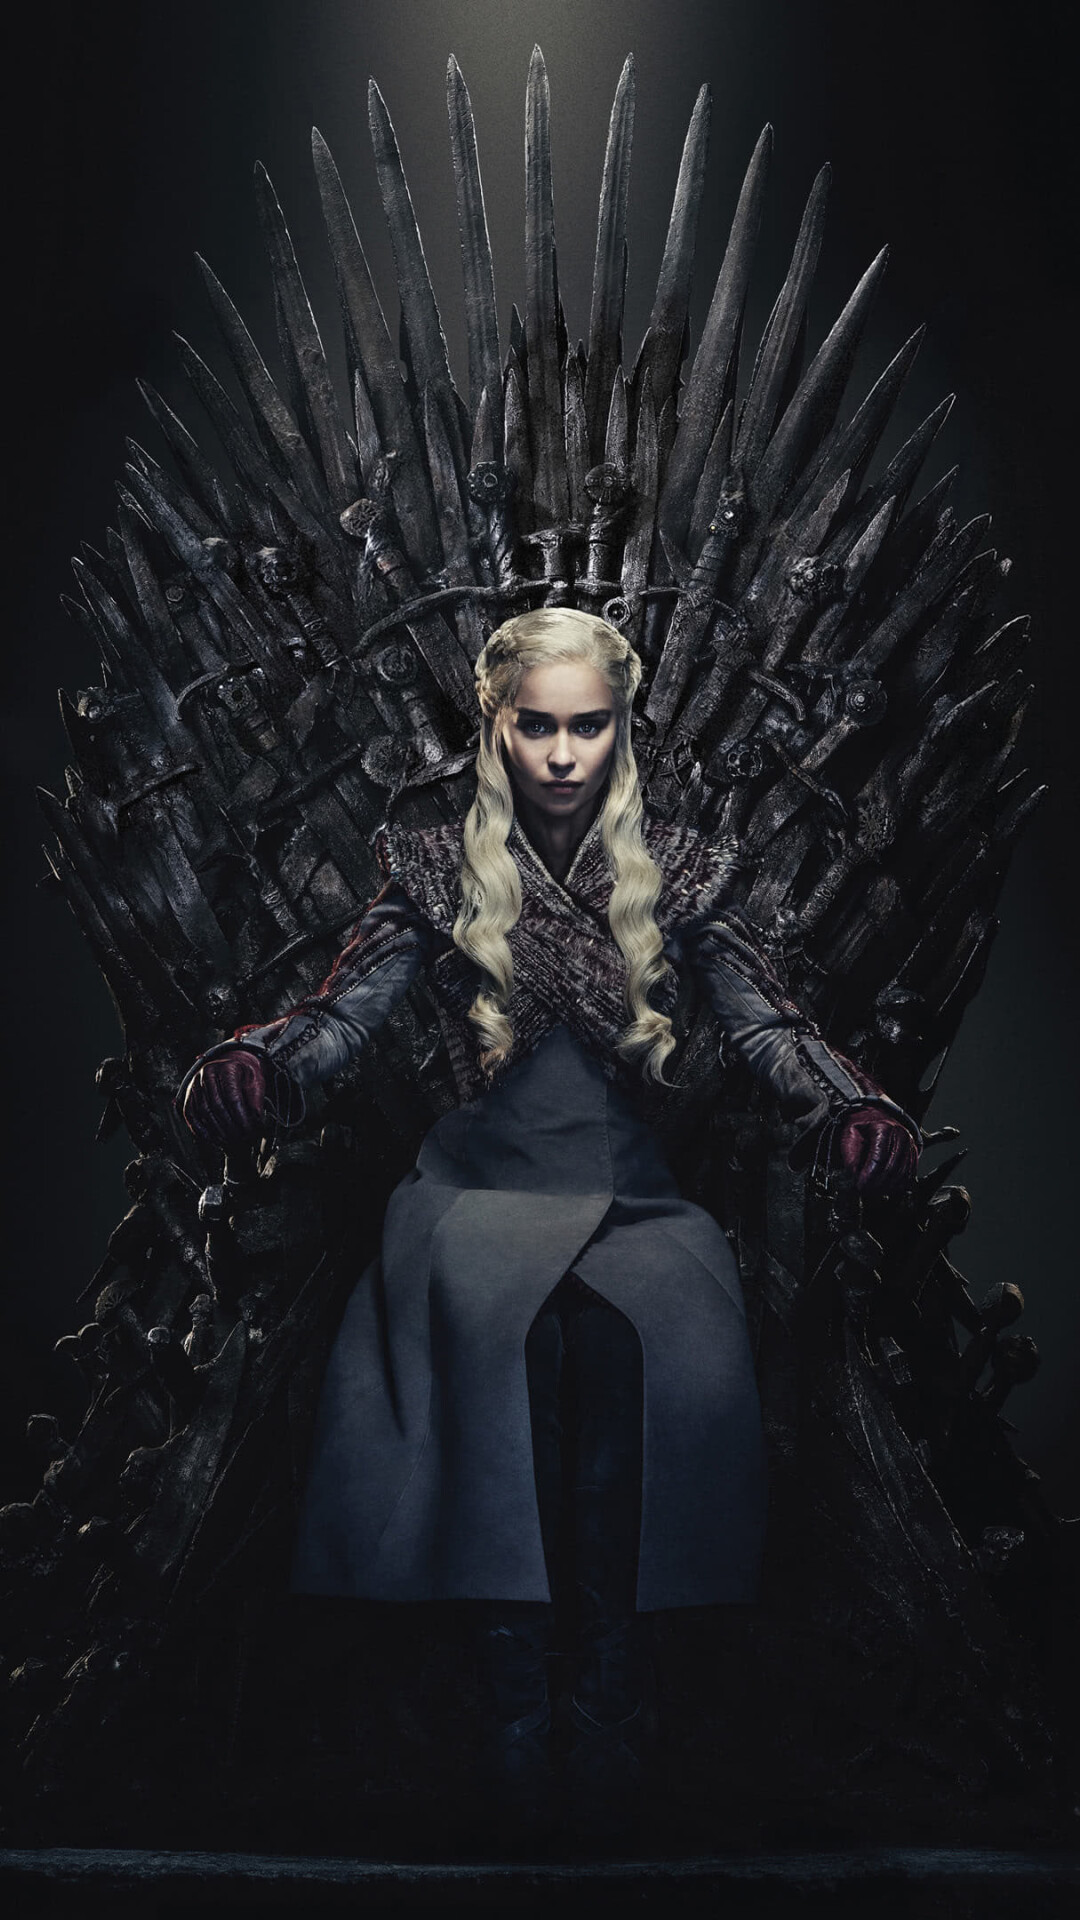 Game of Thrones: Iron Throne, Daenerys Targaryen, Khaleesi of the Great Grass Sea. 1080x1920 Full HD Wallpaper.